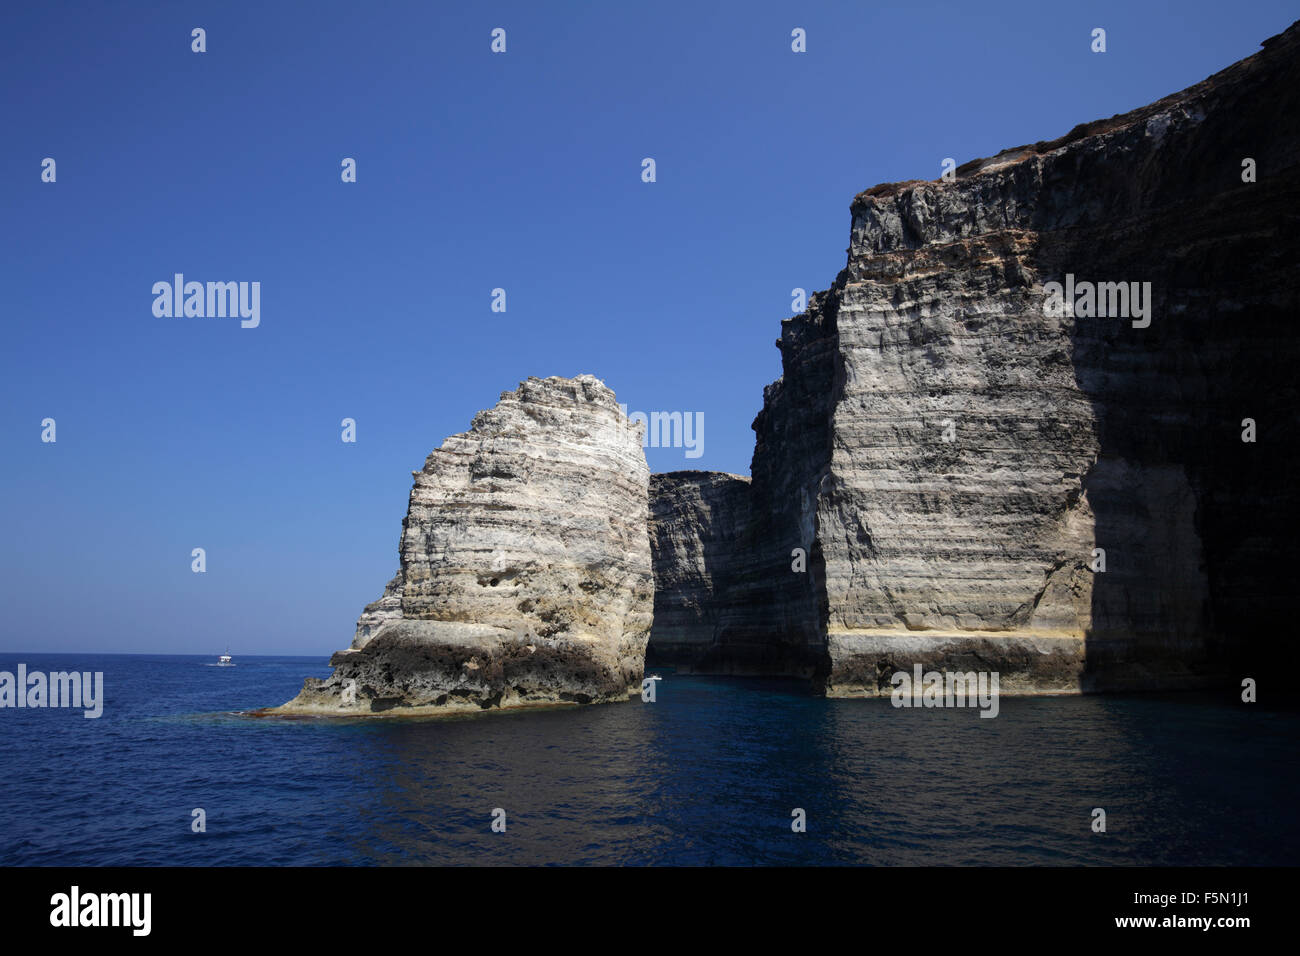 Acantilado de la isla de Lampedusa, Sicilia, Italia Foto de stock